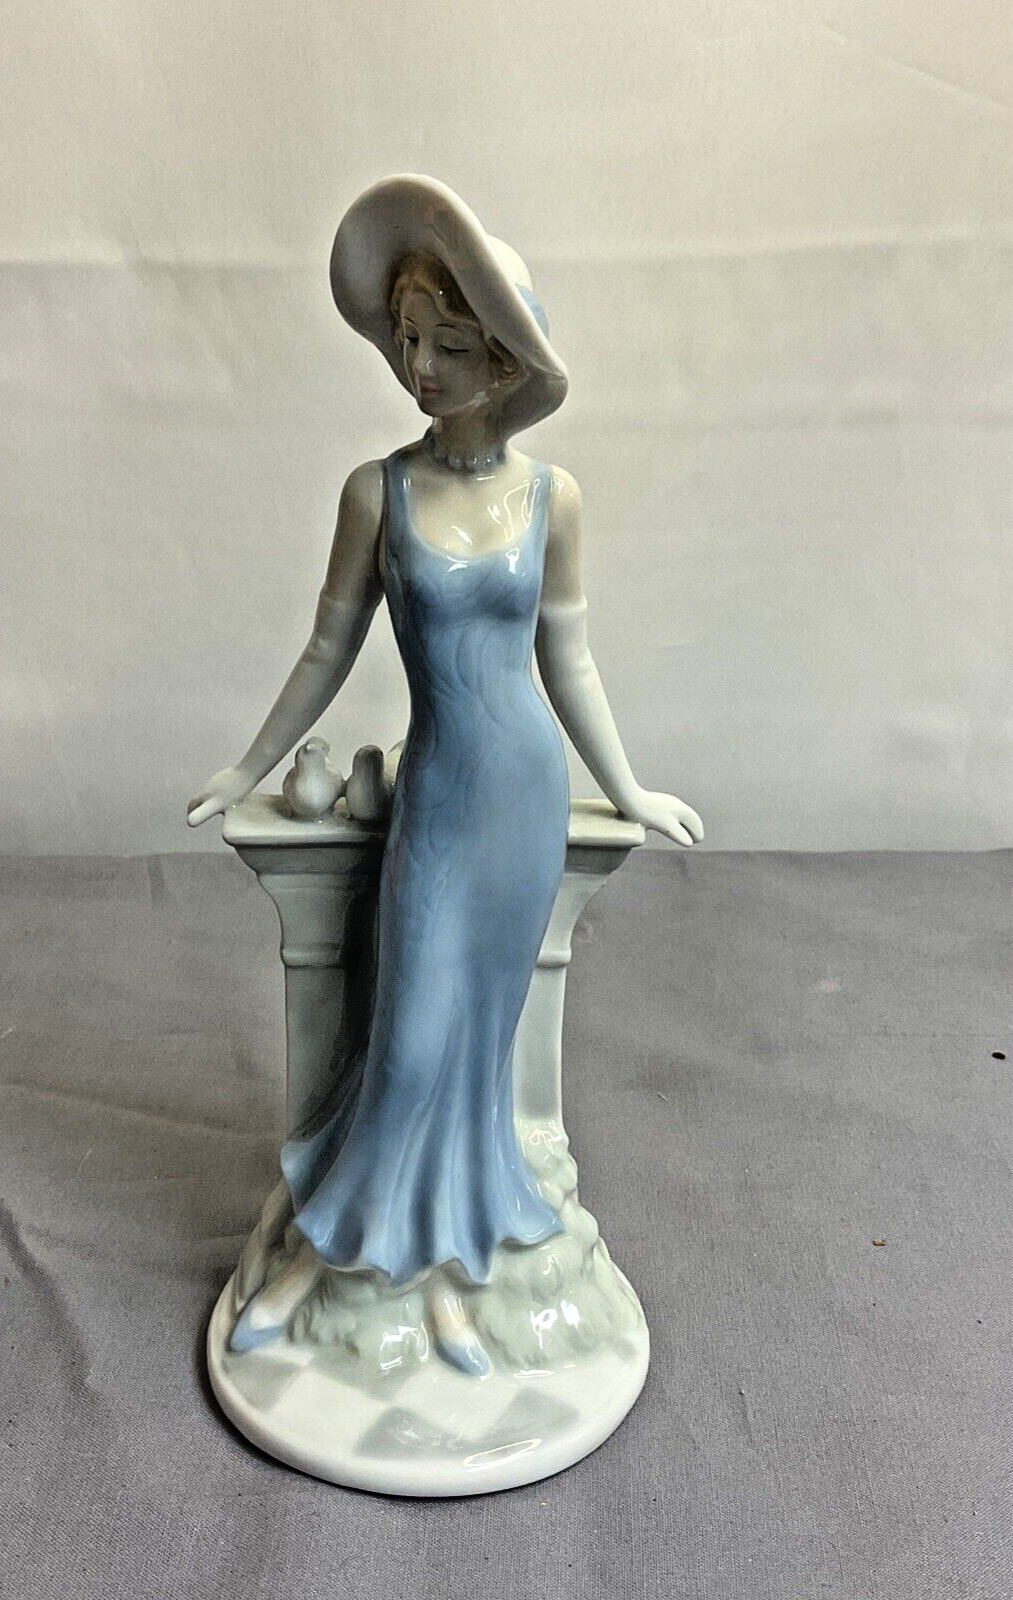 Vintage Elegant Porcelain Figurine Bonnet Lady With Doves - High Gloss Smooth